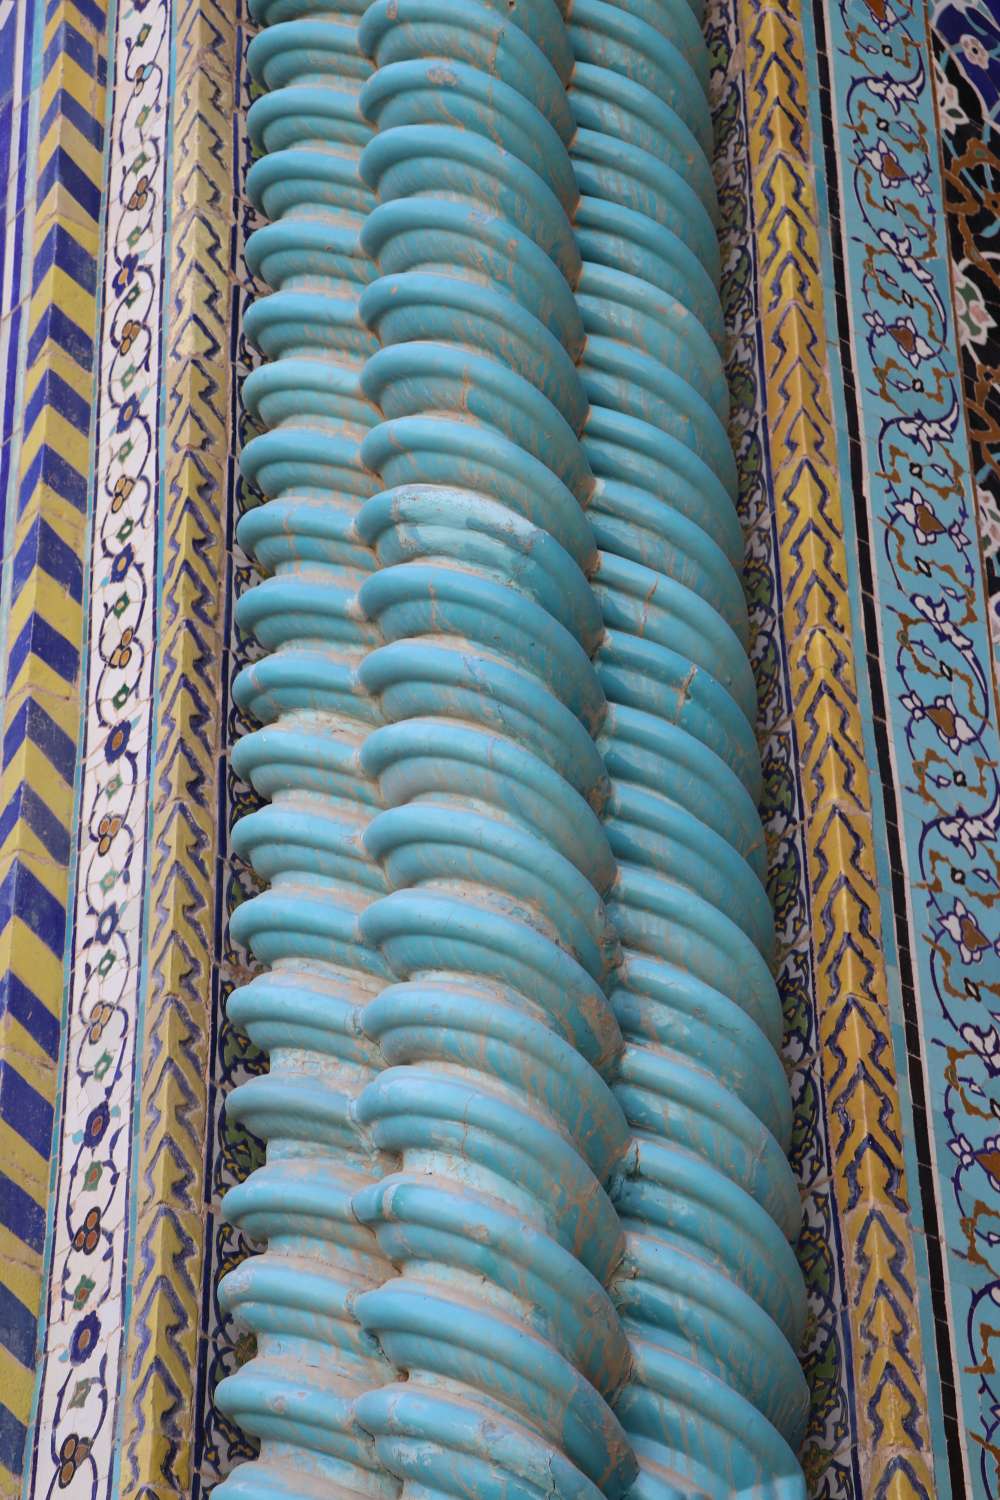 Tilework and ceramic molding on entrance portal.